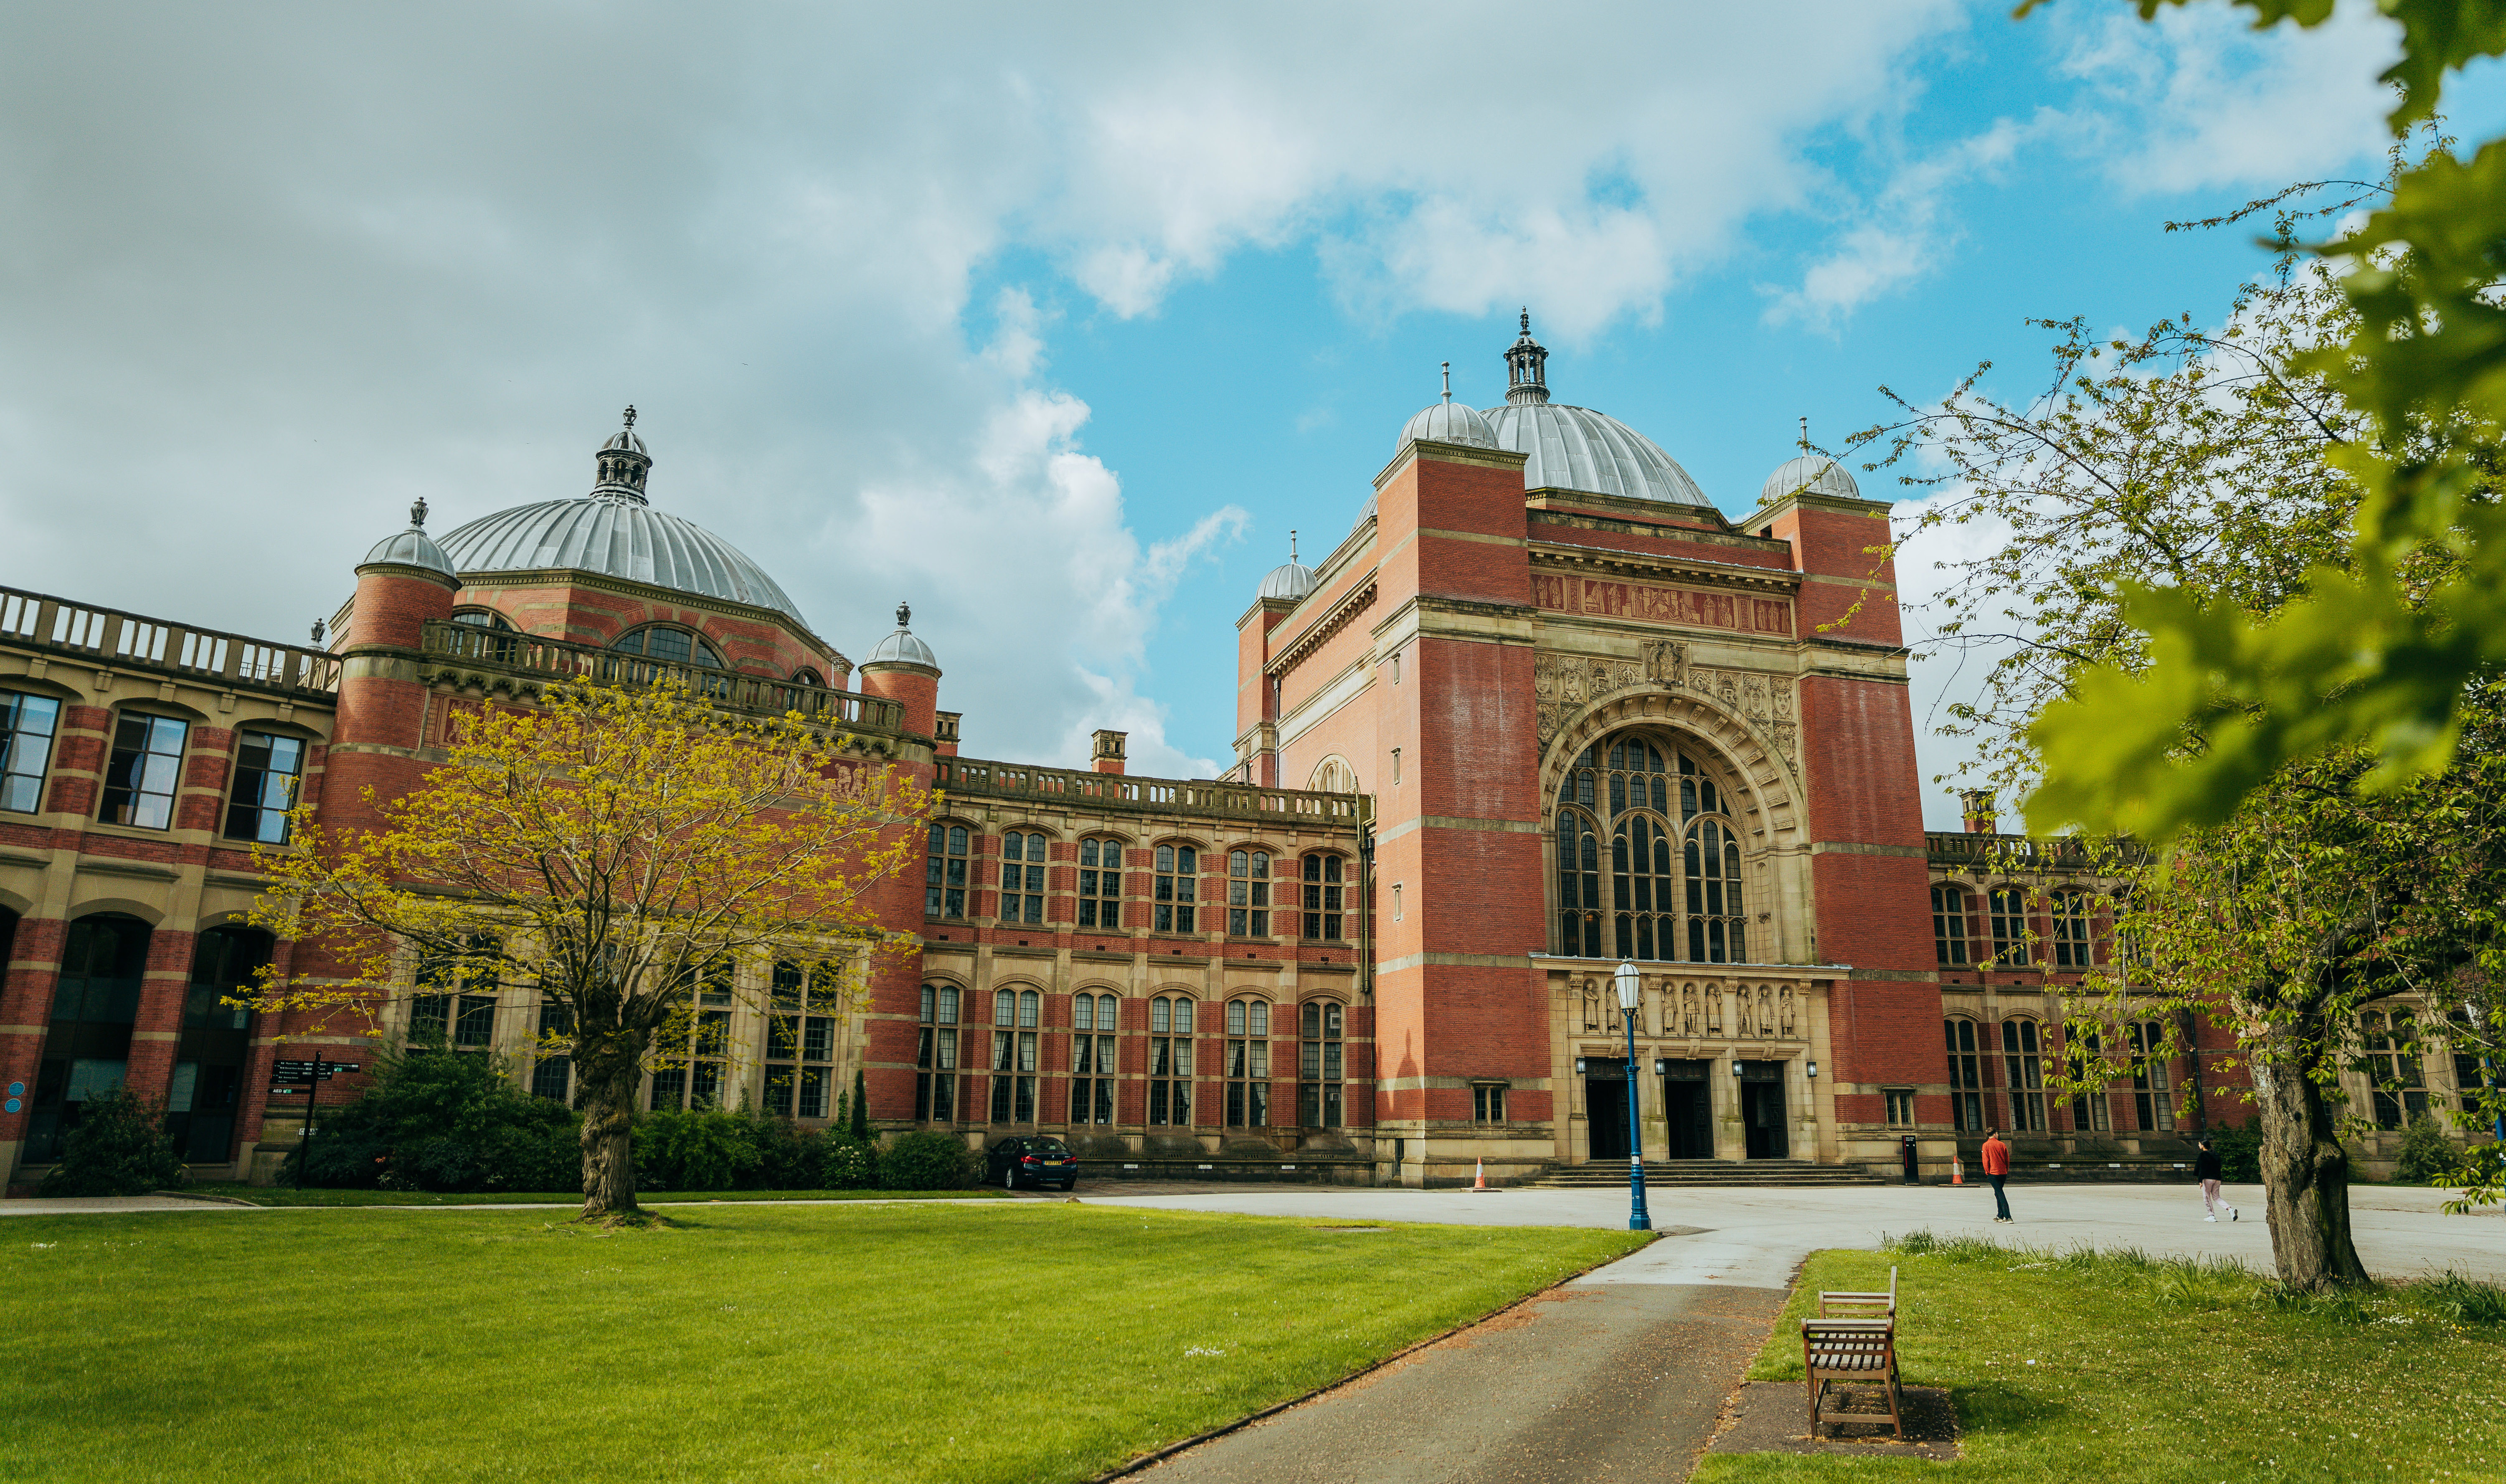 Chancellor's Court at the University of Birmingham campus.